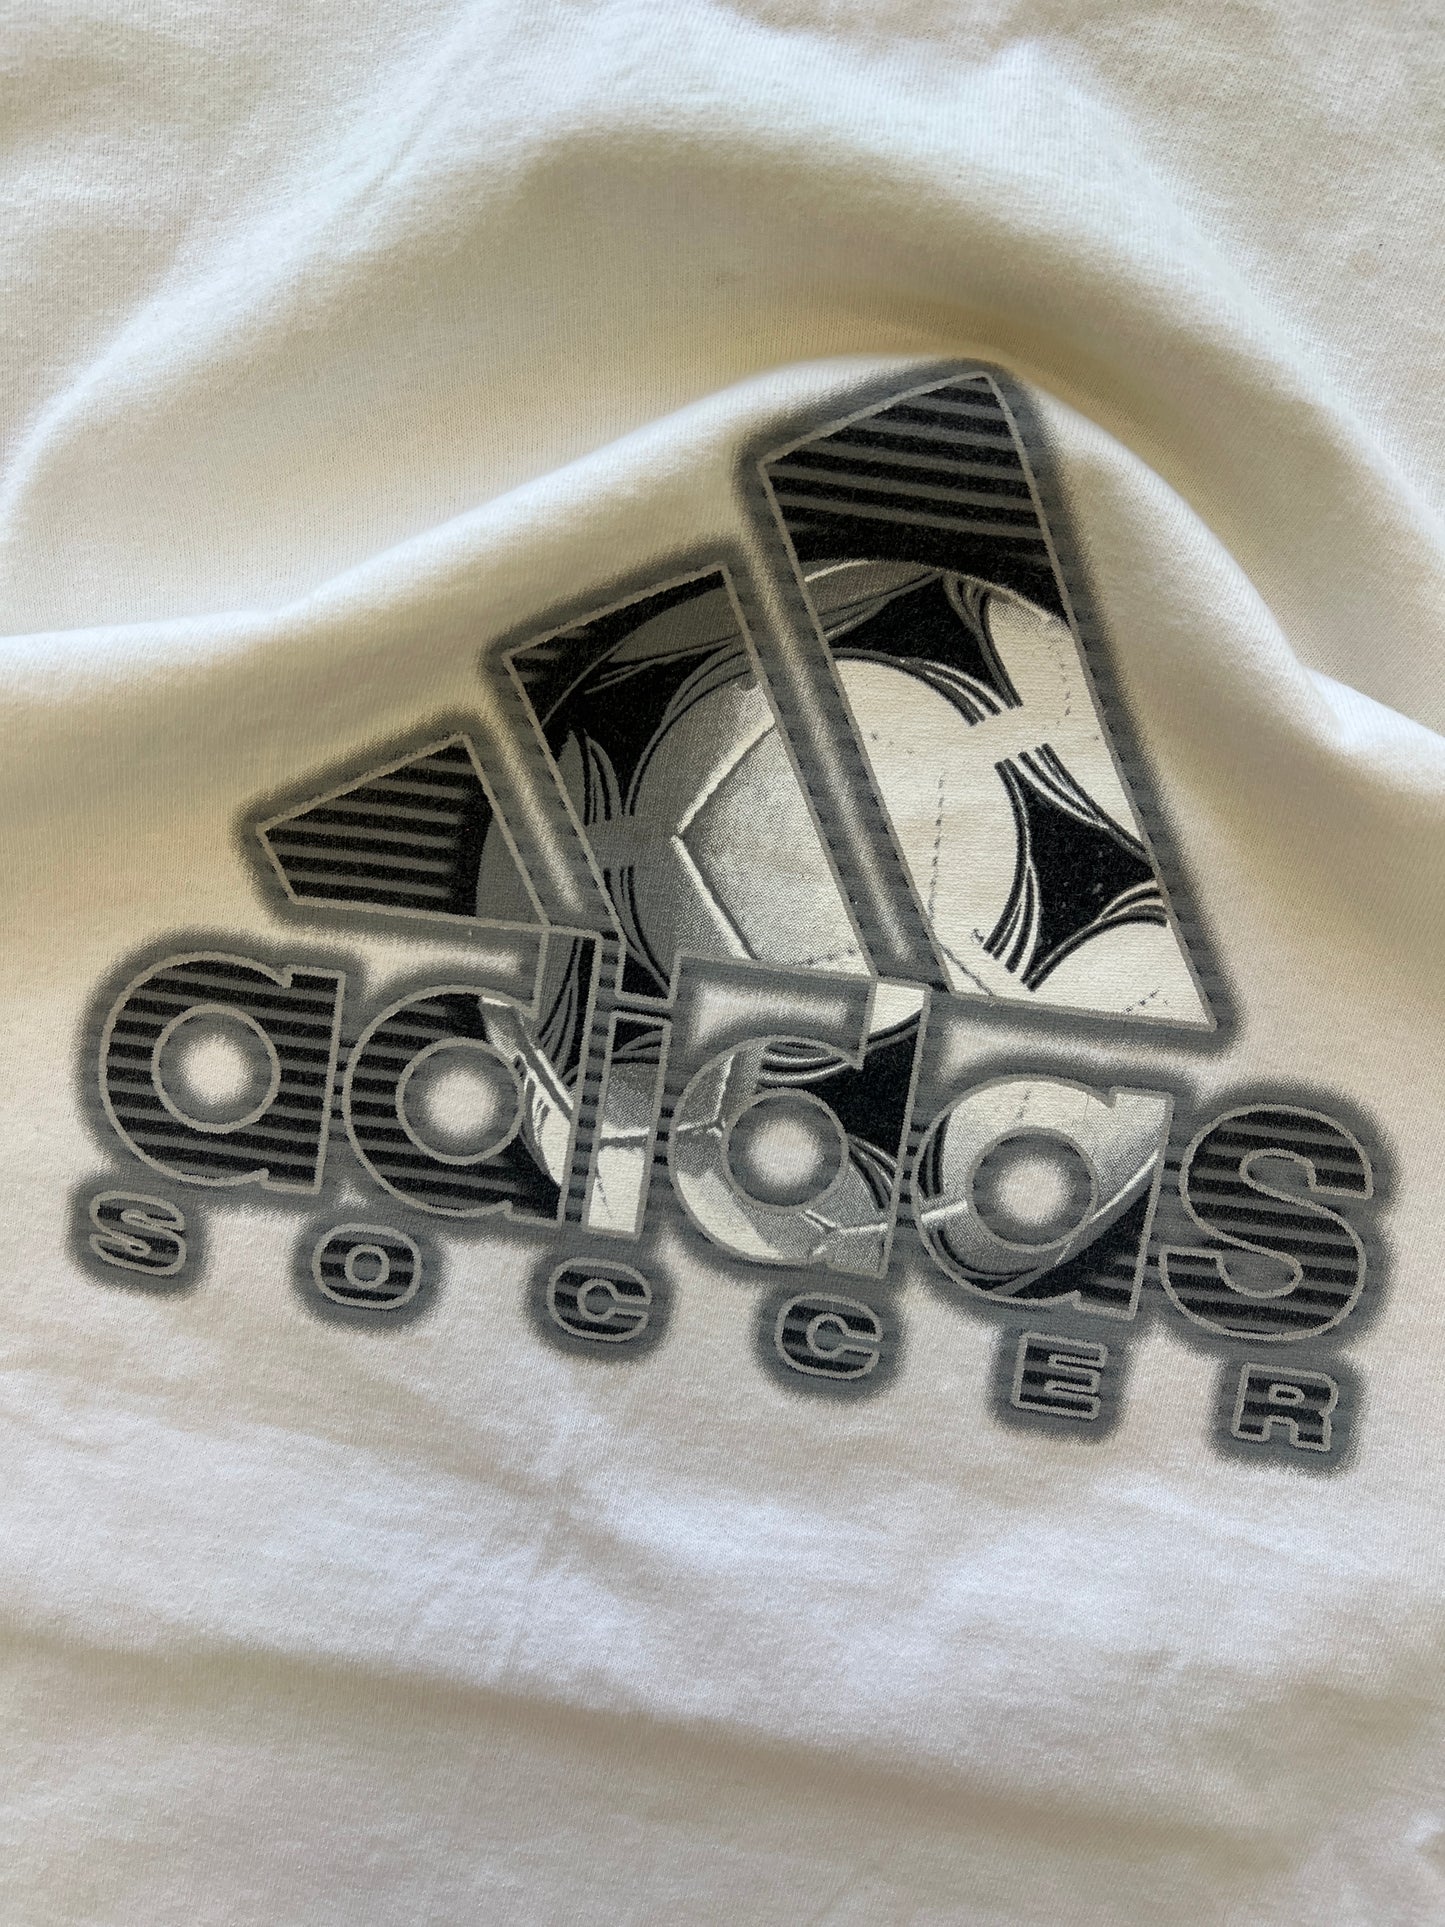 Vintage Adidas Soccer Shirt - M